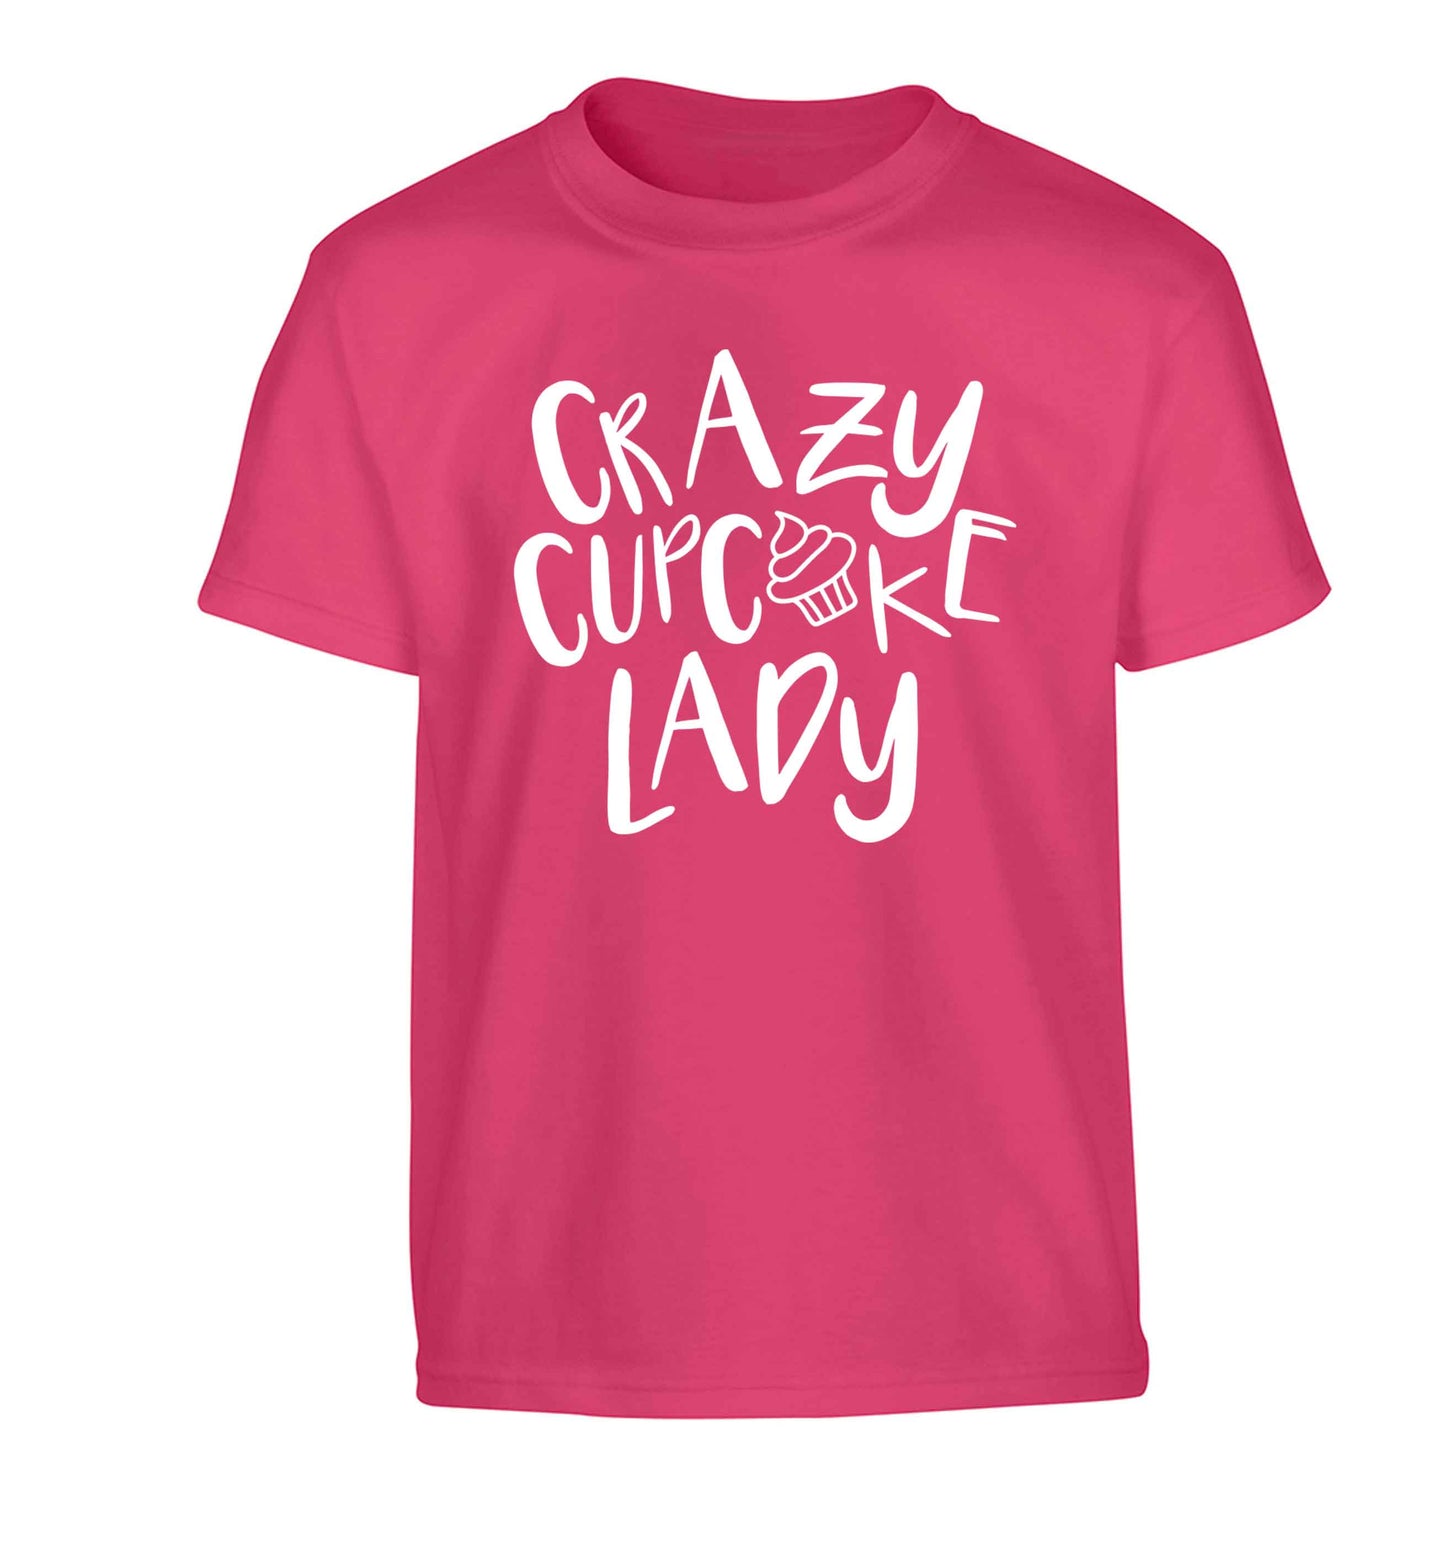 Crazy cupcake lady Children's pink Tshirt 12-13 Years